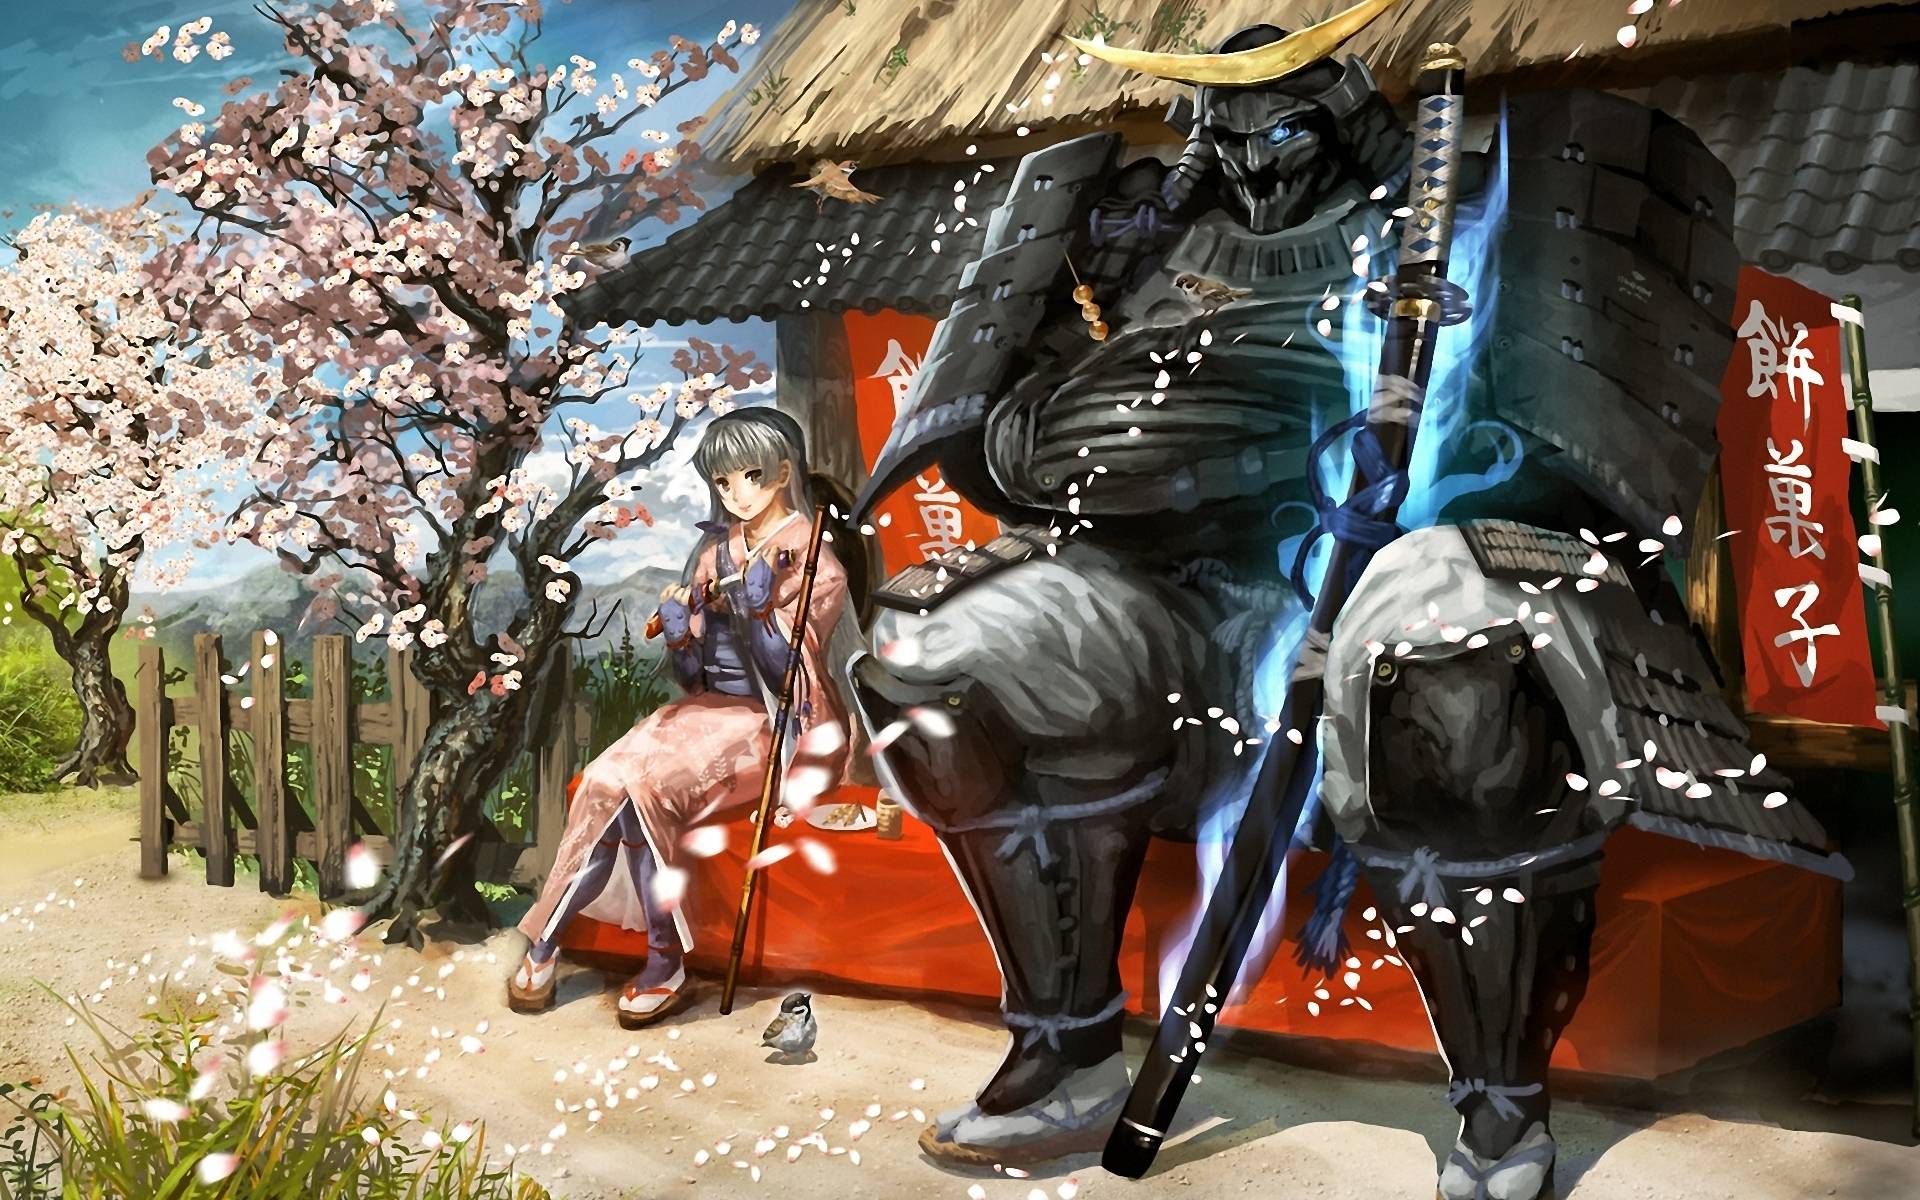 Anime Samurai Wallpaper Free Anime Samurai